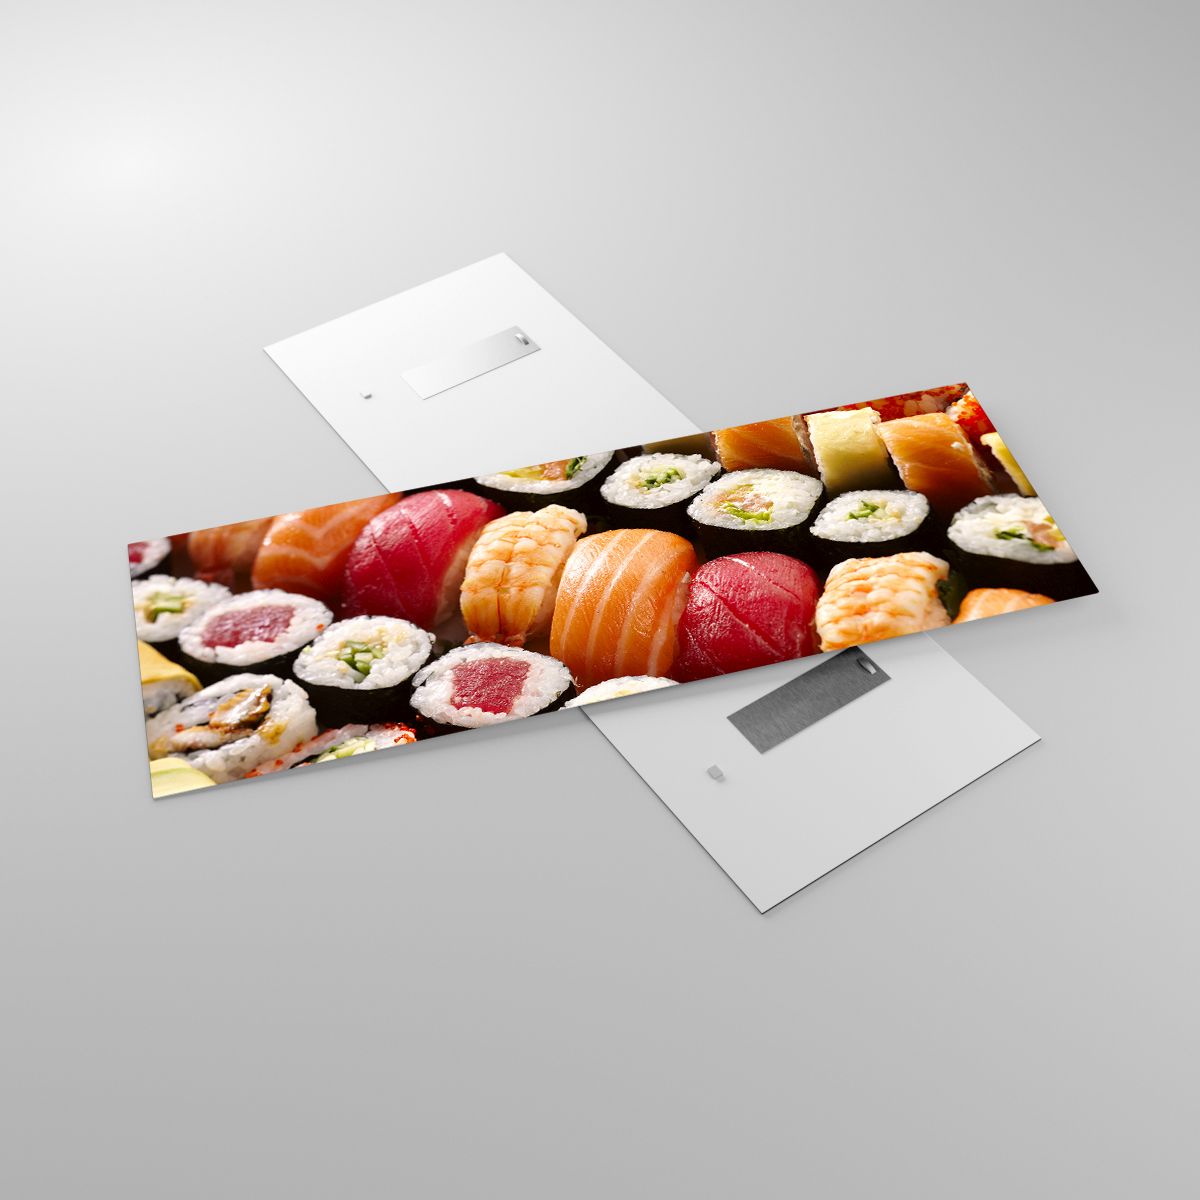 Glasbild Gastronomie, Glasbild Sushi, Glasbild Asien, Glasbild Japan, Glasbild Sashimi